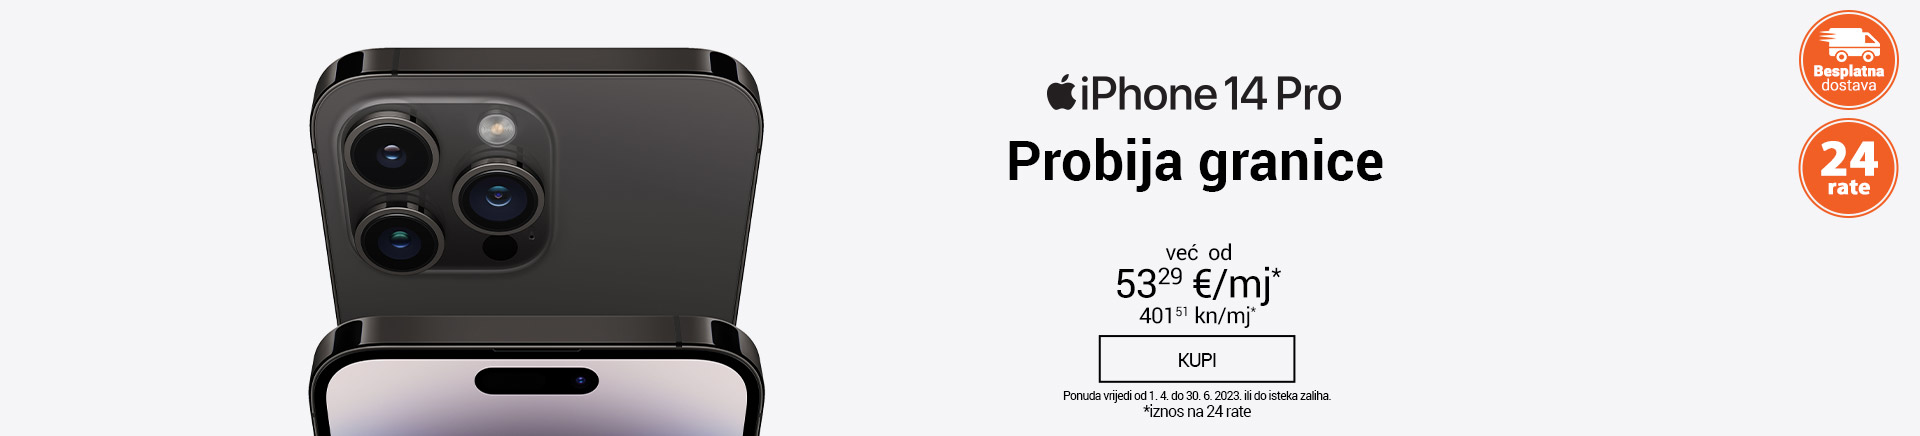 HR apple Iphone 14 Pro MOBILE 380 X 436.jpg